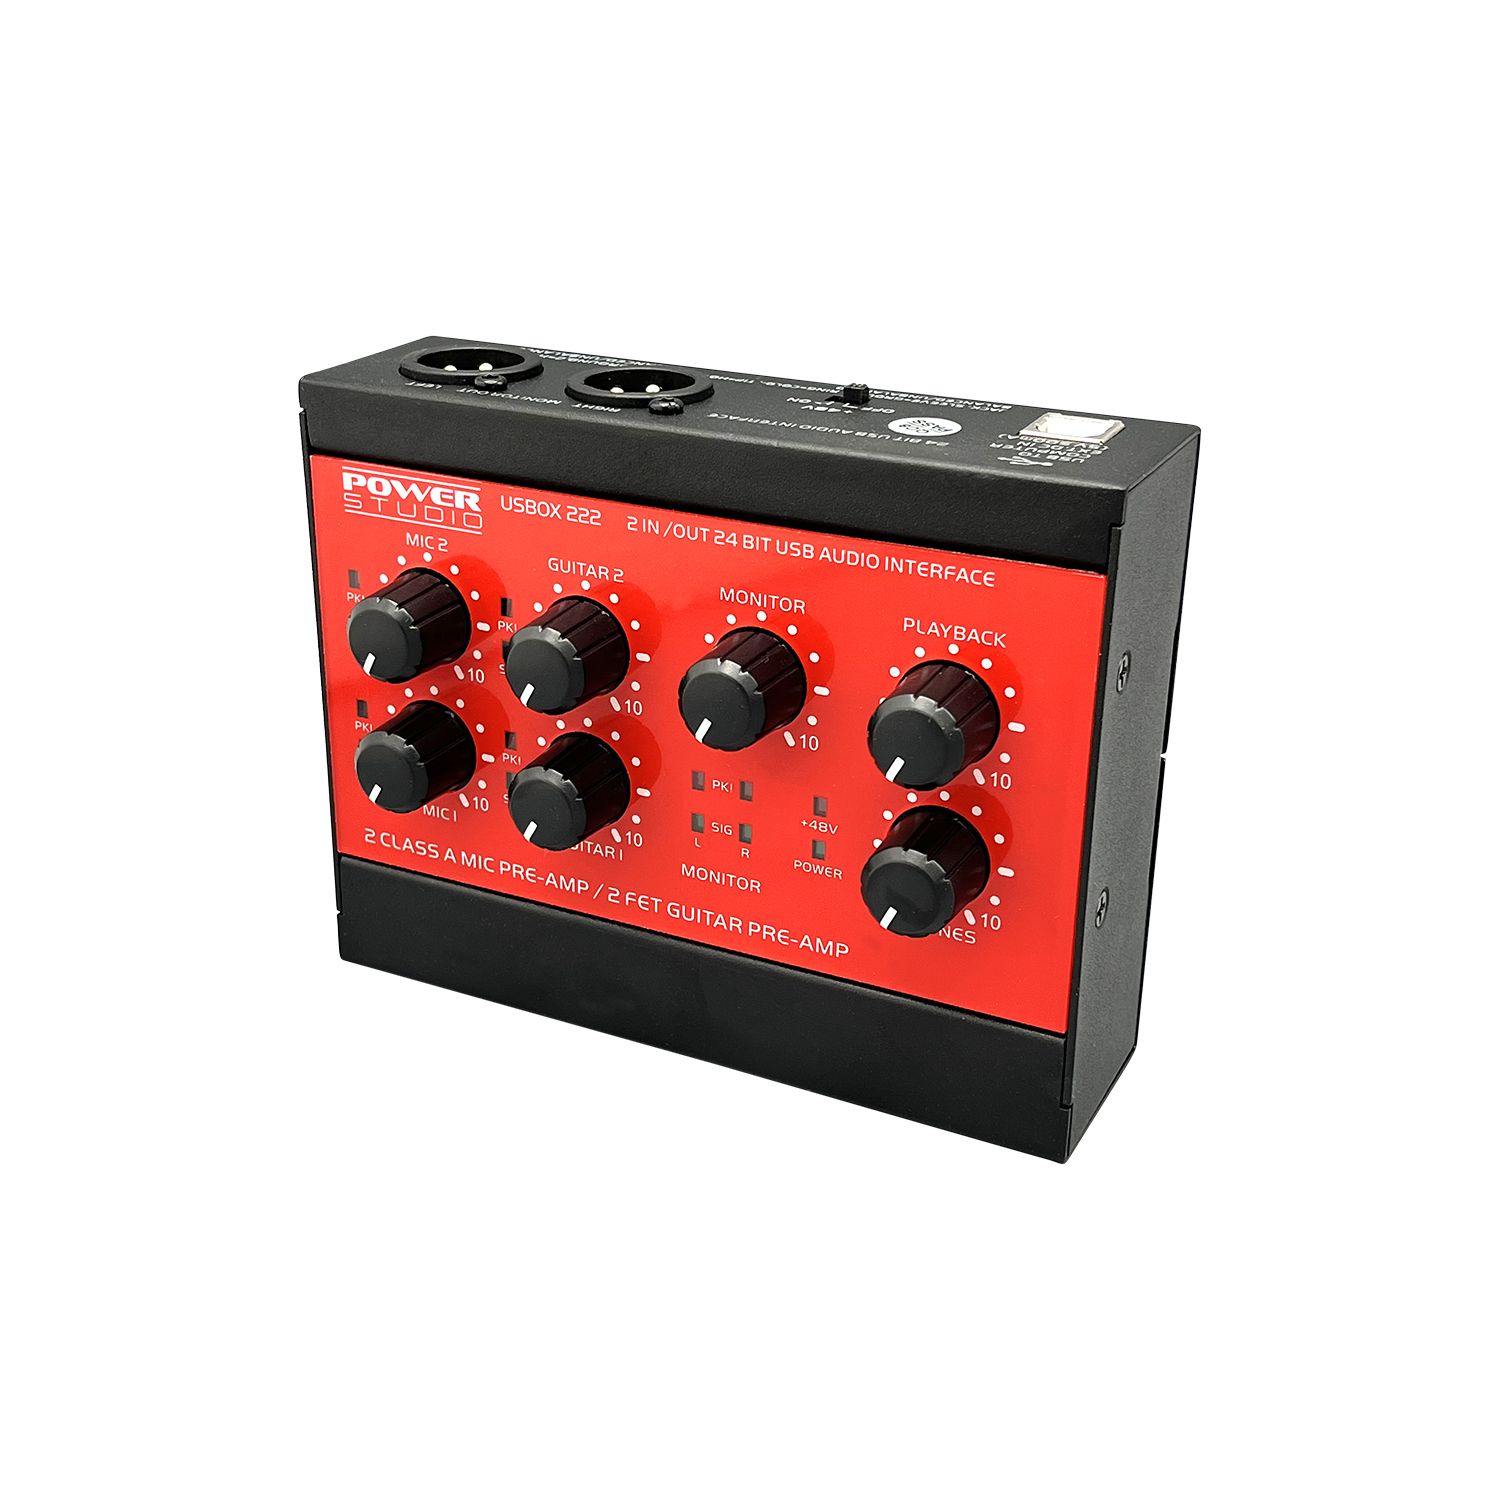 Power Studio Usbox 222 - USB audio interface - Variation 2